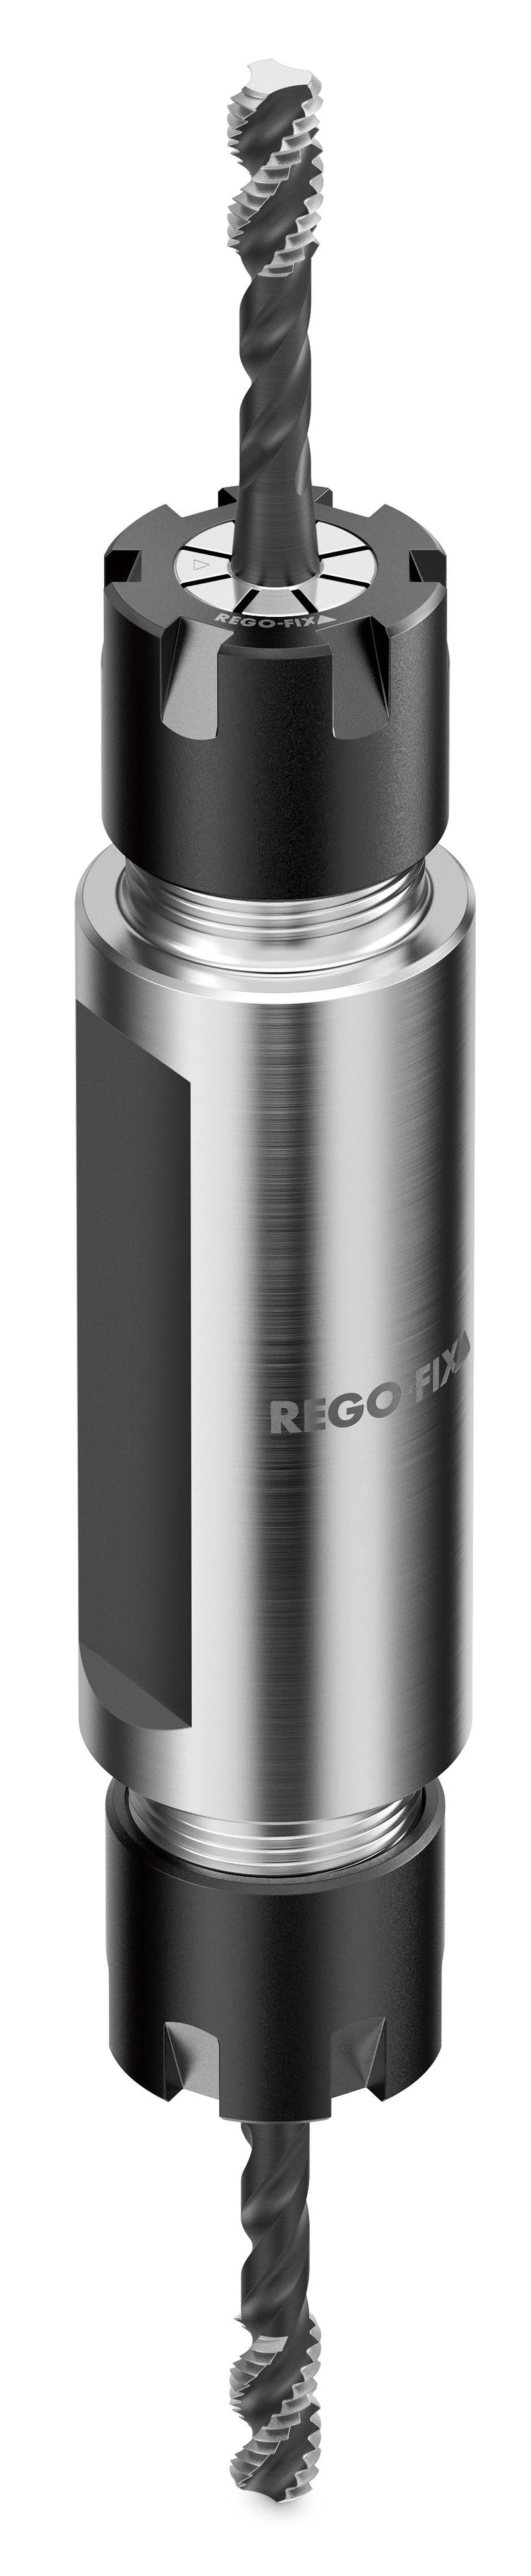 Rego-Fix CYDF 20 x 055/ERM 16 Tool Holder 2620.21634 (0647797)